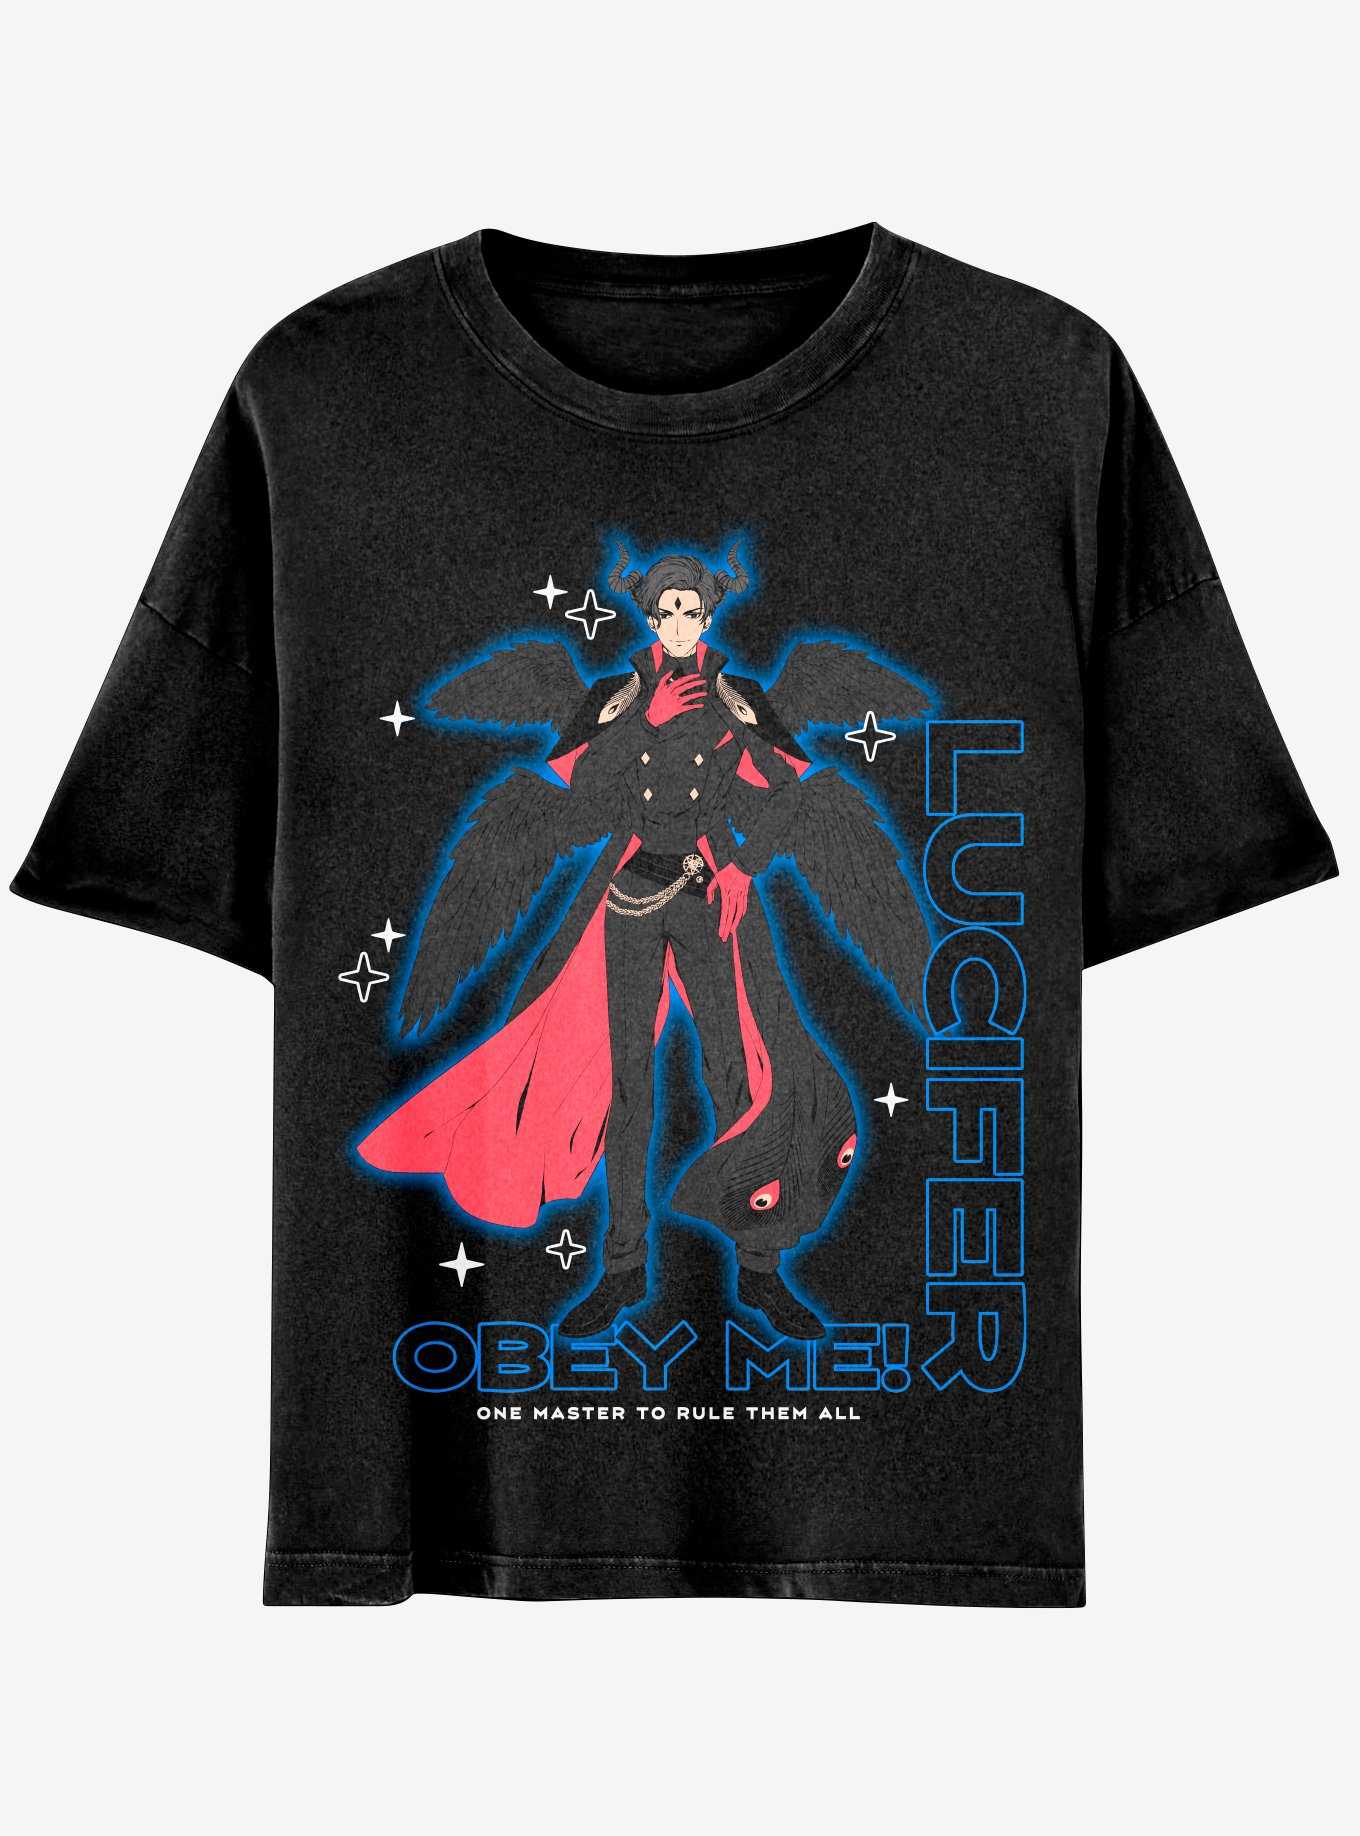 Obey Me! Lucifer Boyfriend Fit Girls T-Shirt, , hi-res